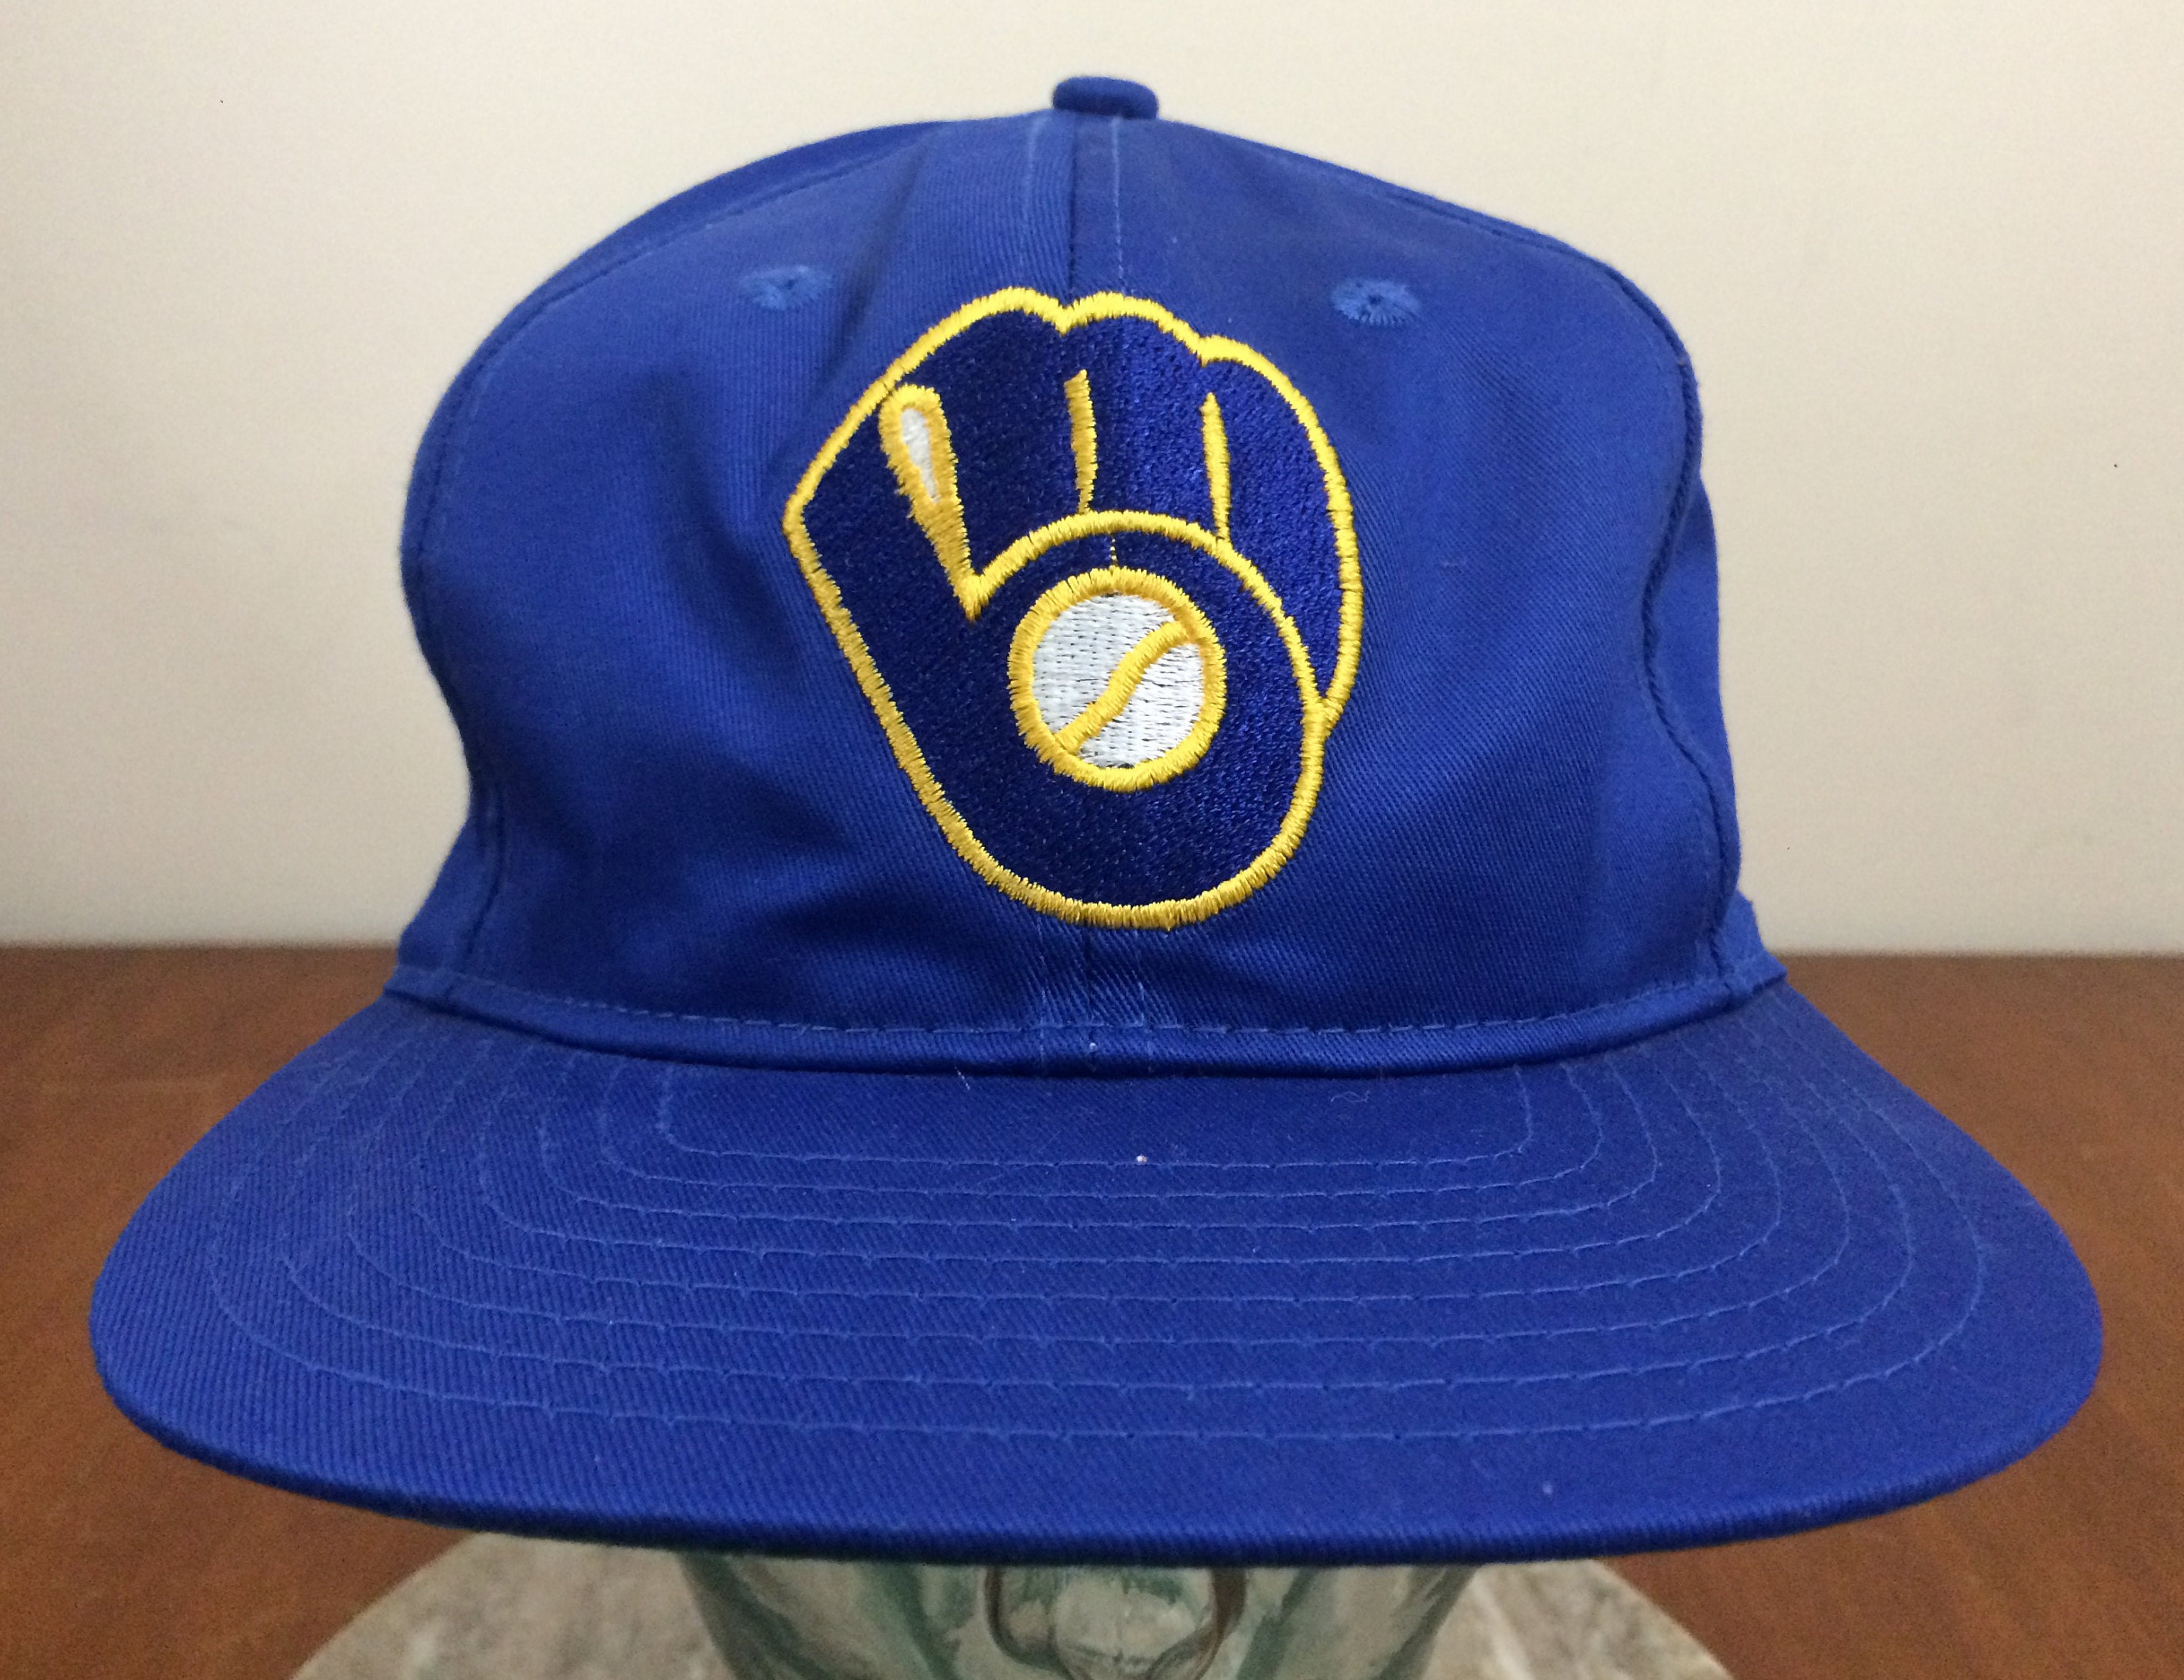 MLB Milwaukee Brewers Custom Jersey + Sitching Cap - BTF Store